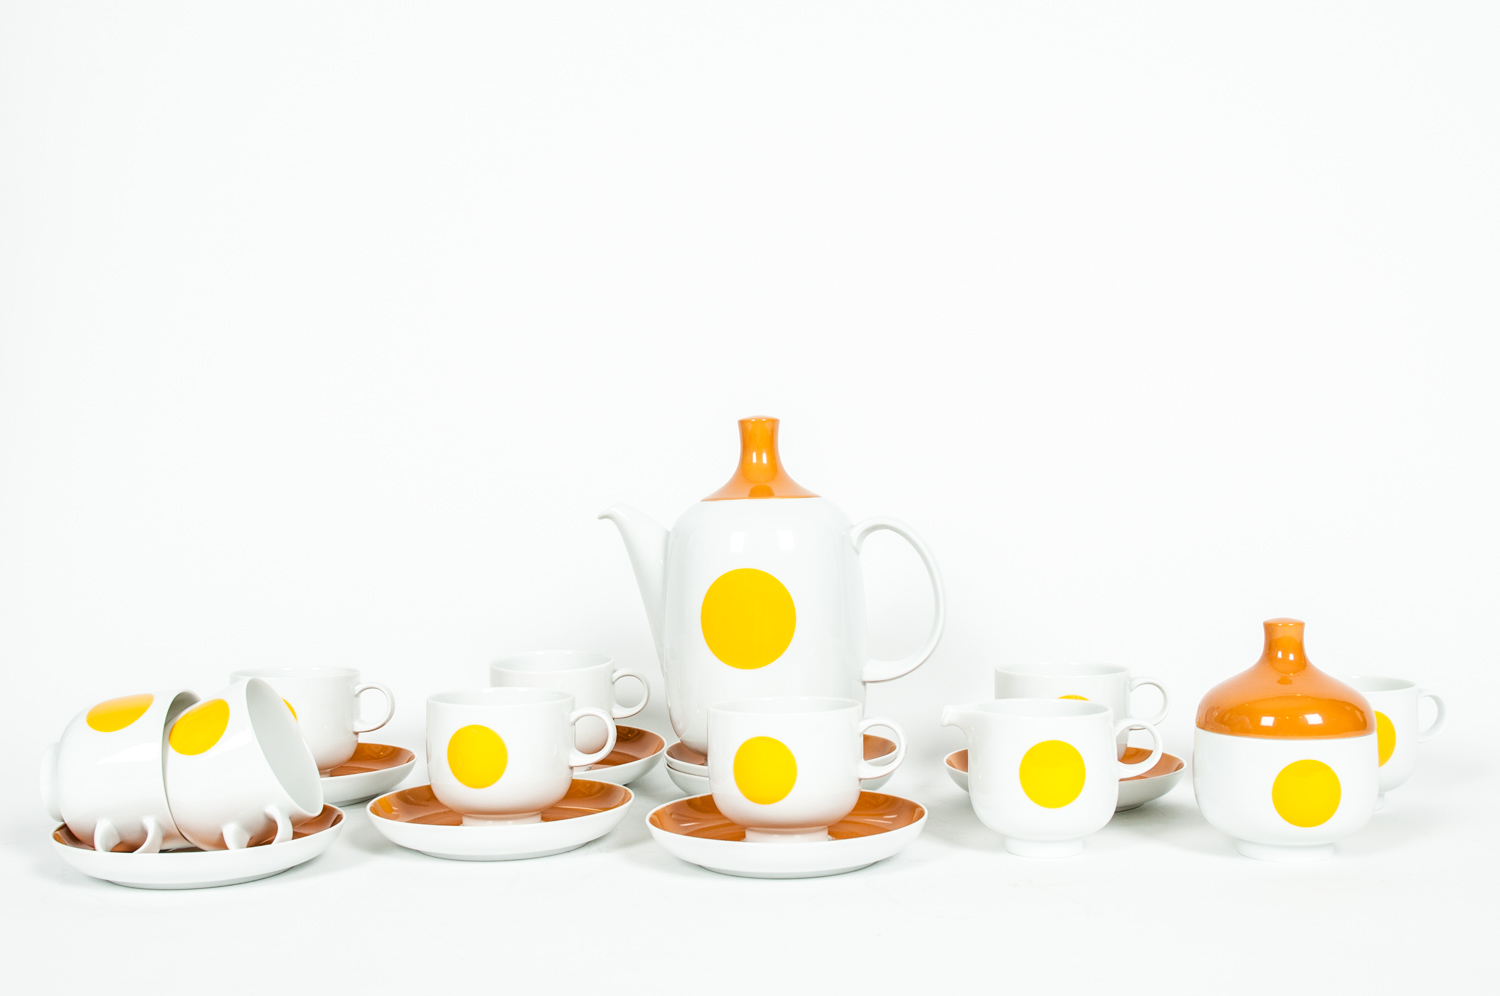 Mid-Century Modern Ceramic Coffee Cup/Tea Cup Set